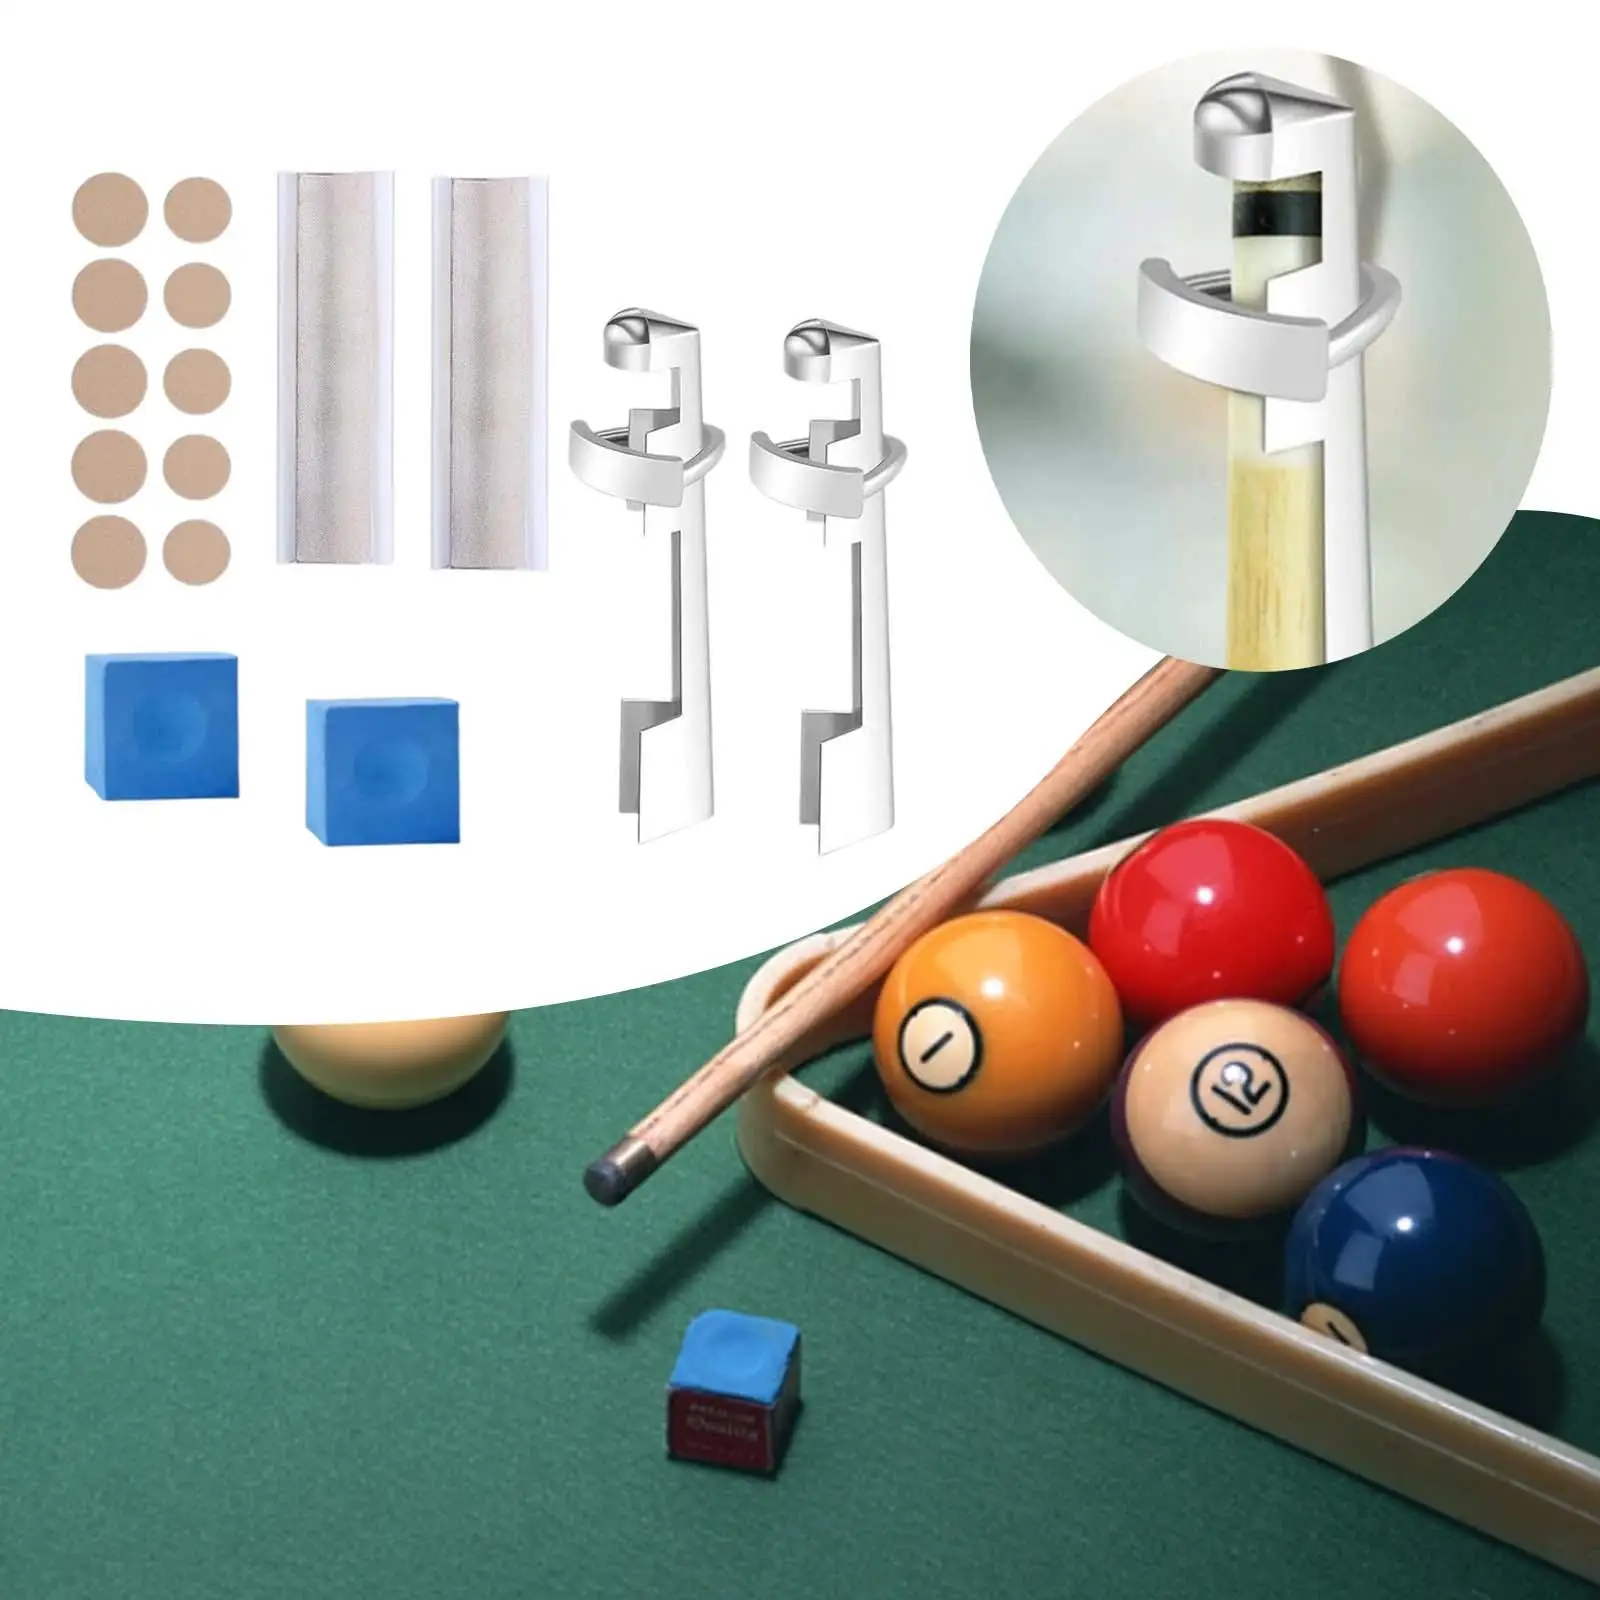 16 Pieces Pool Cue Tip Repair Kit Snooker Table Pool Accessories Pool Table